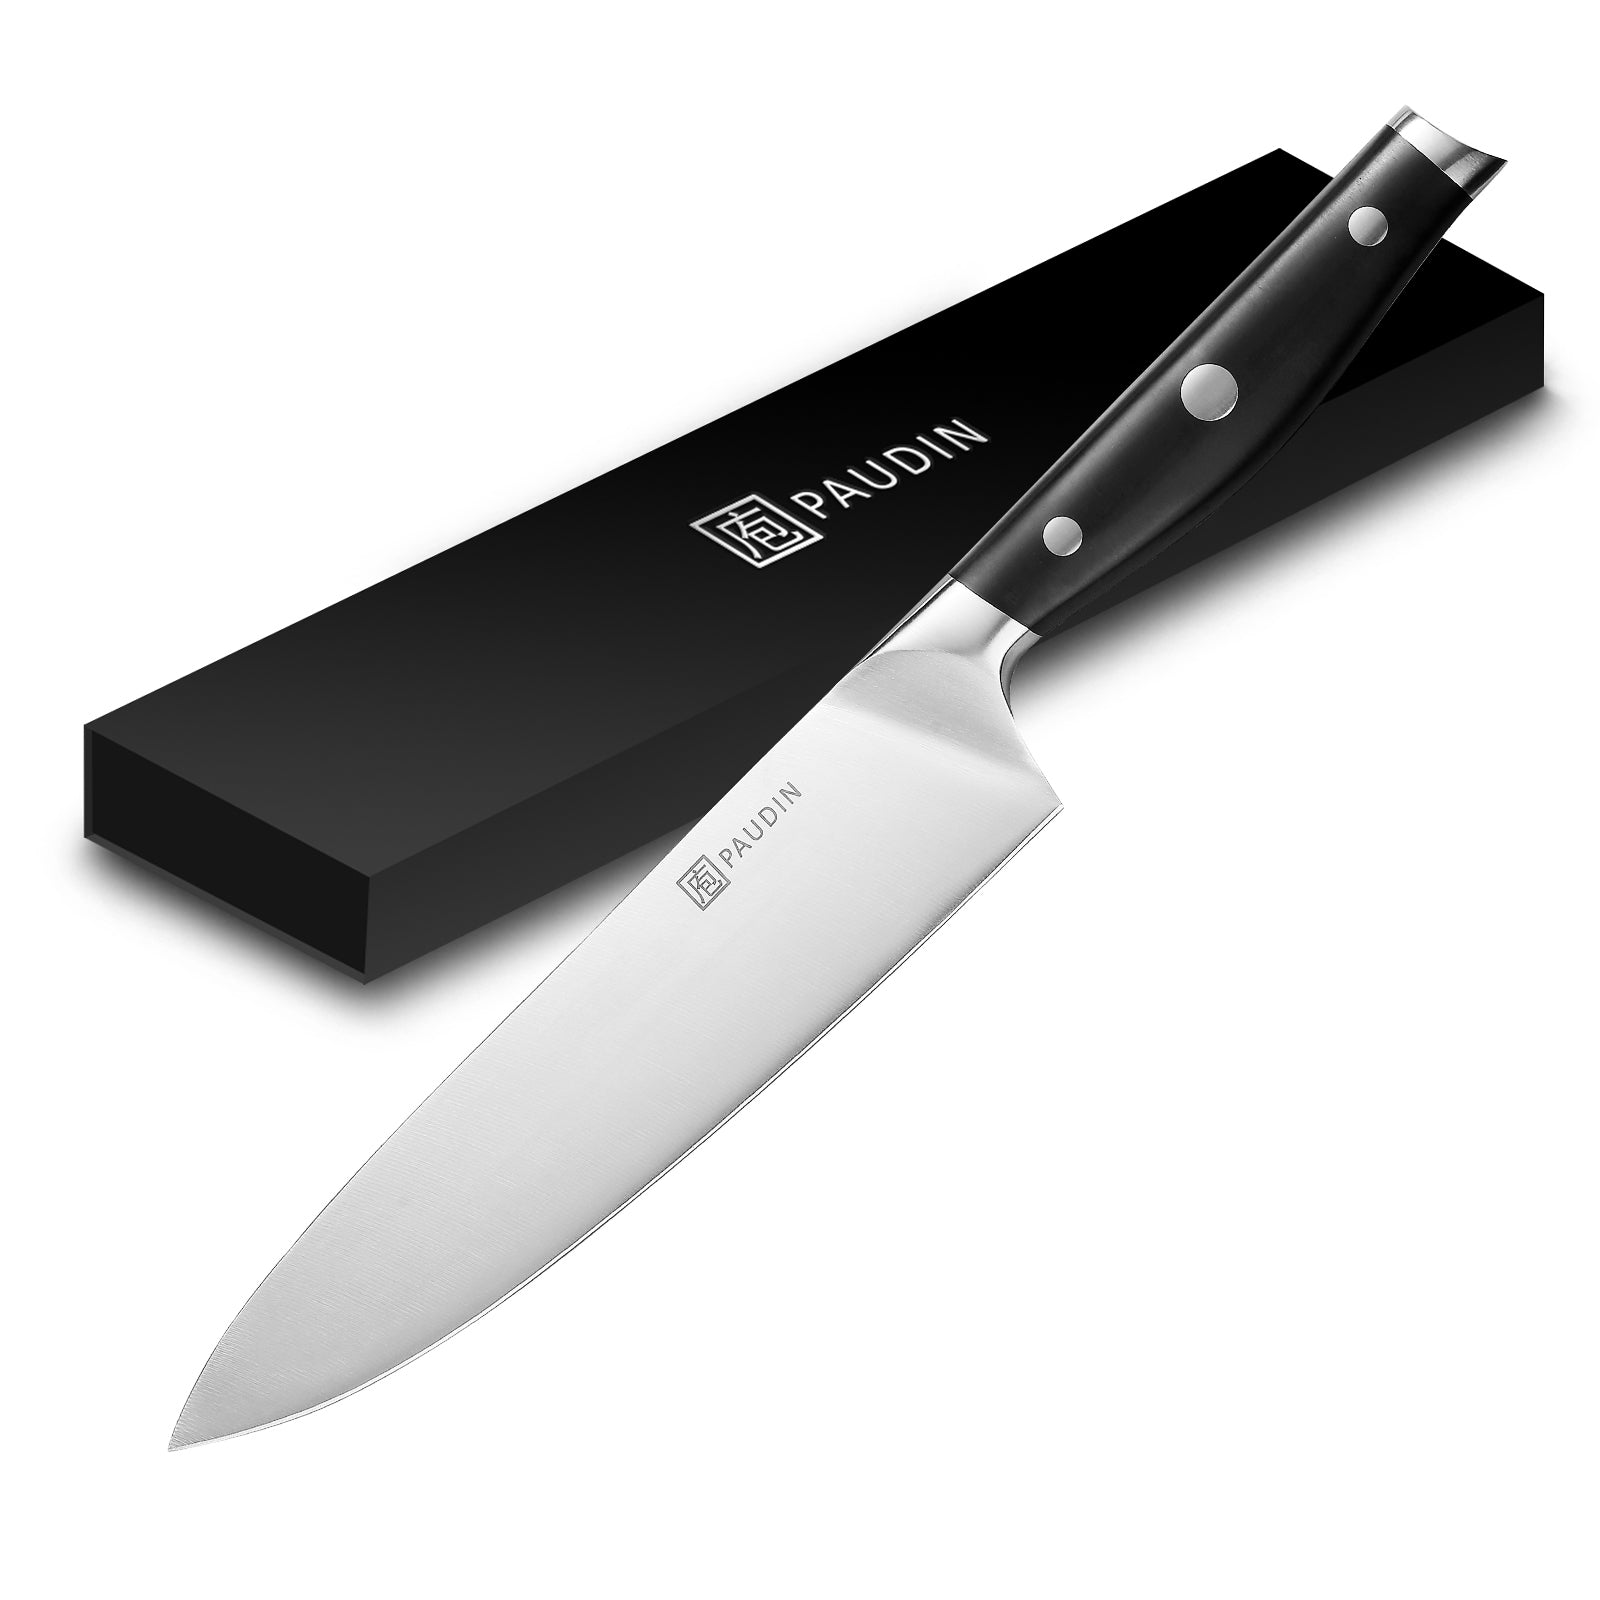  PAUDIN Knife Set, 5Pcs Professional Black Chef's Knife